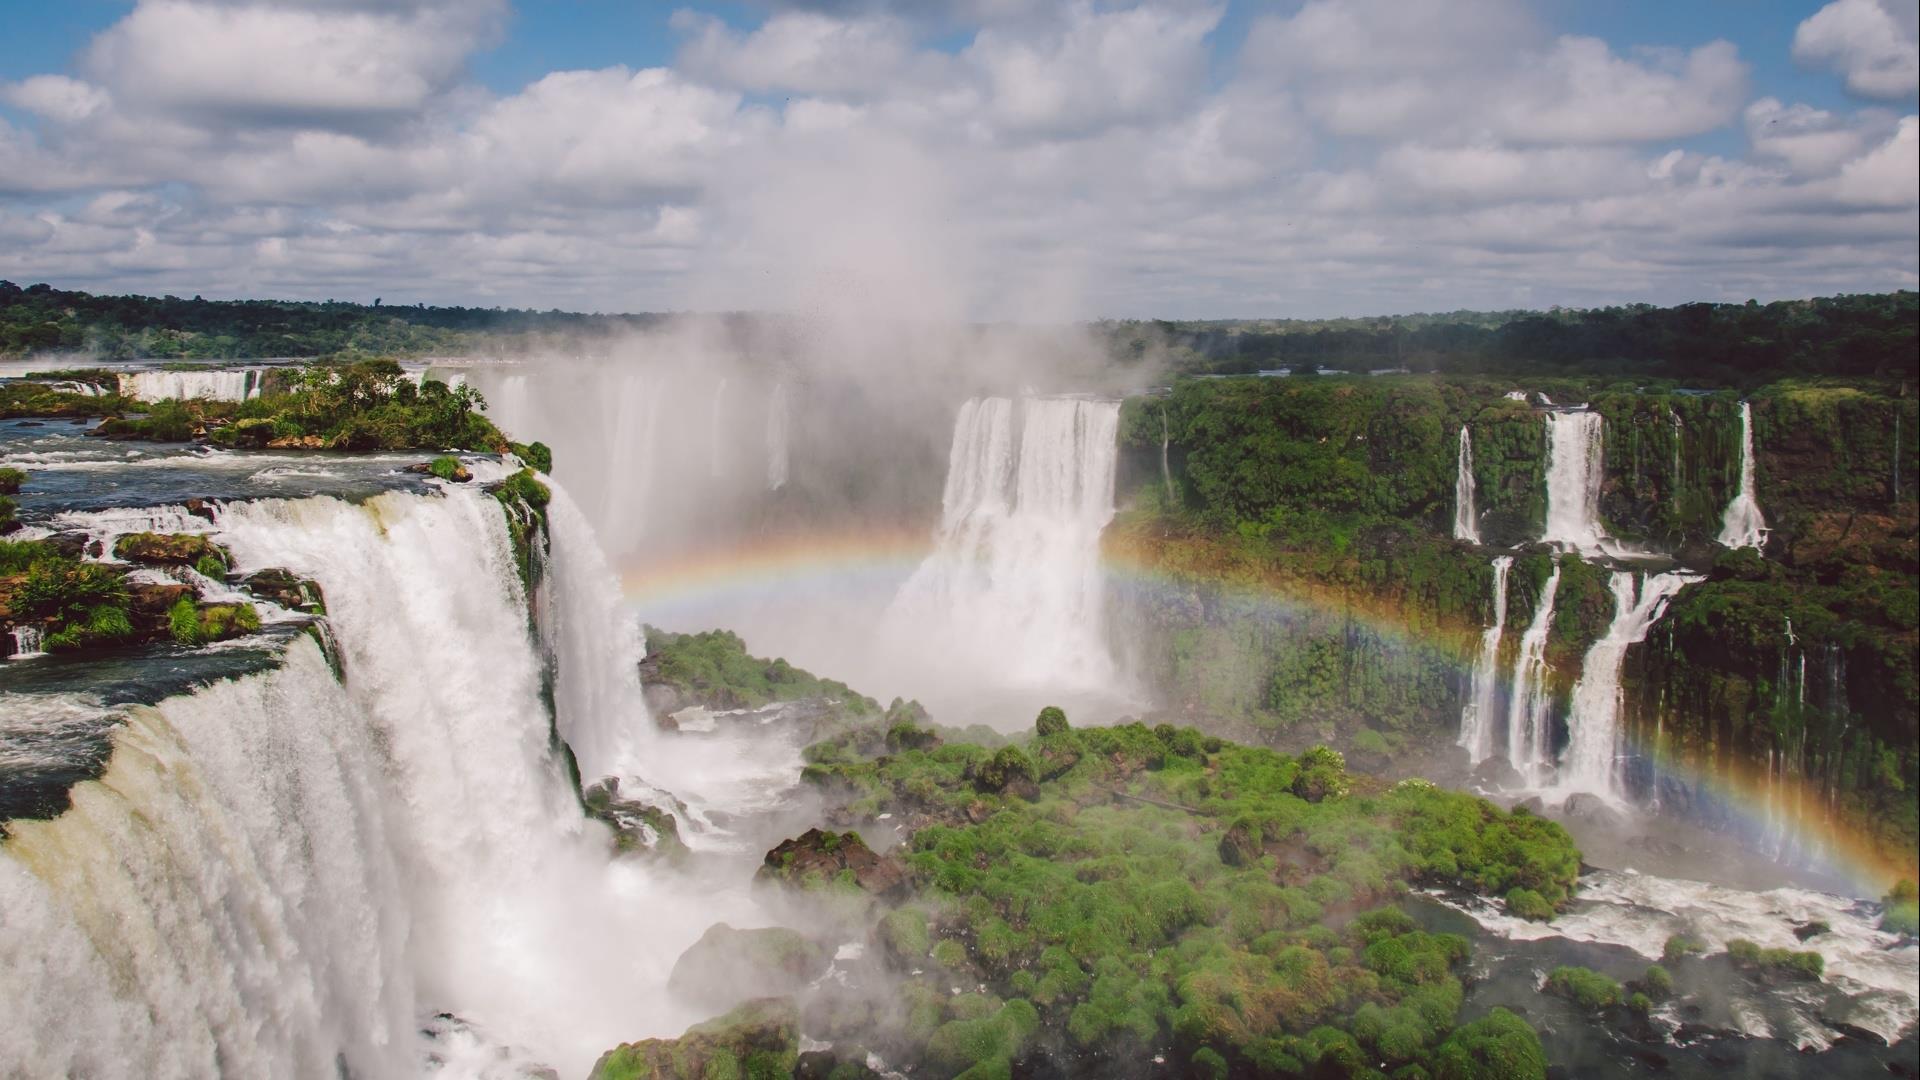 Foz do Iguaçu in Brazil and Argentina / Nature lover's paradise